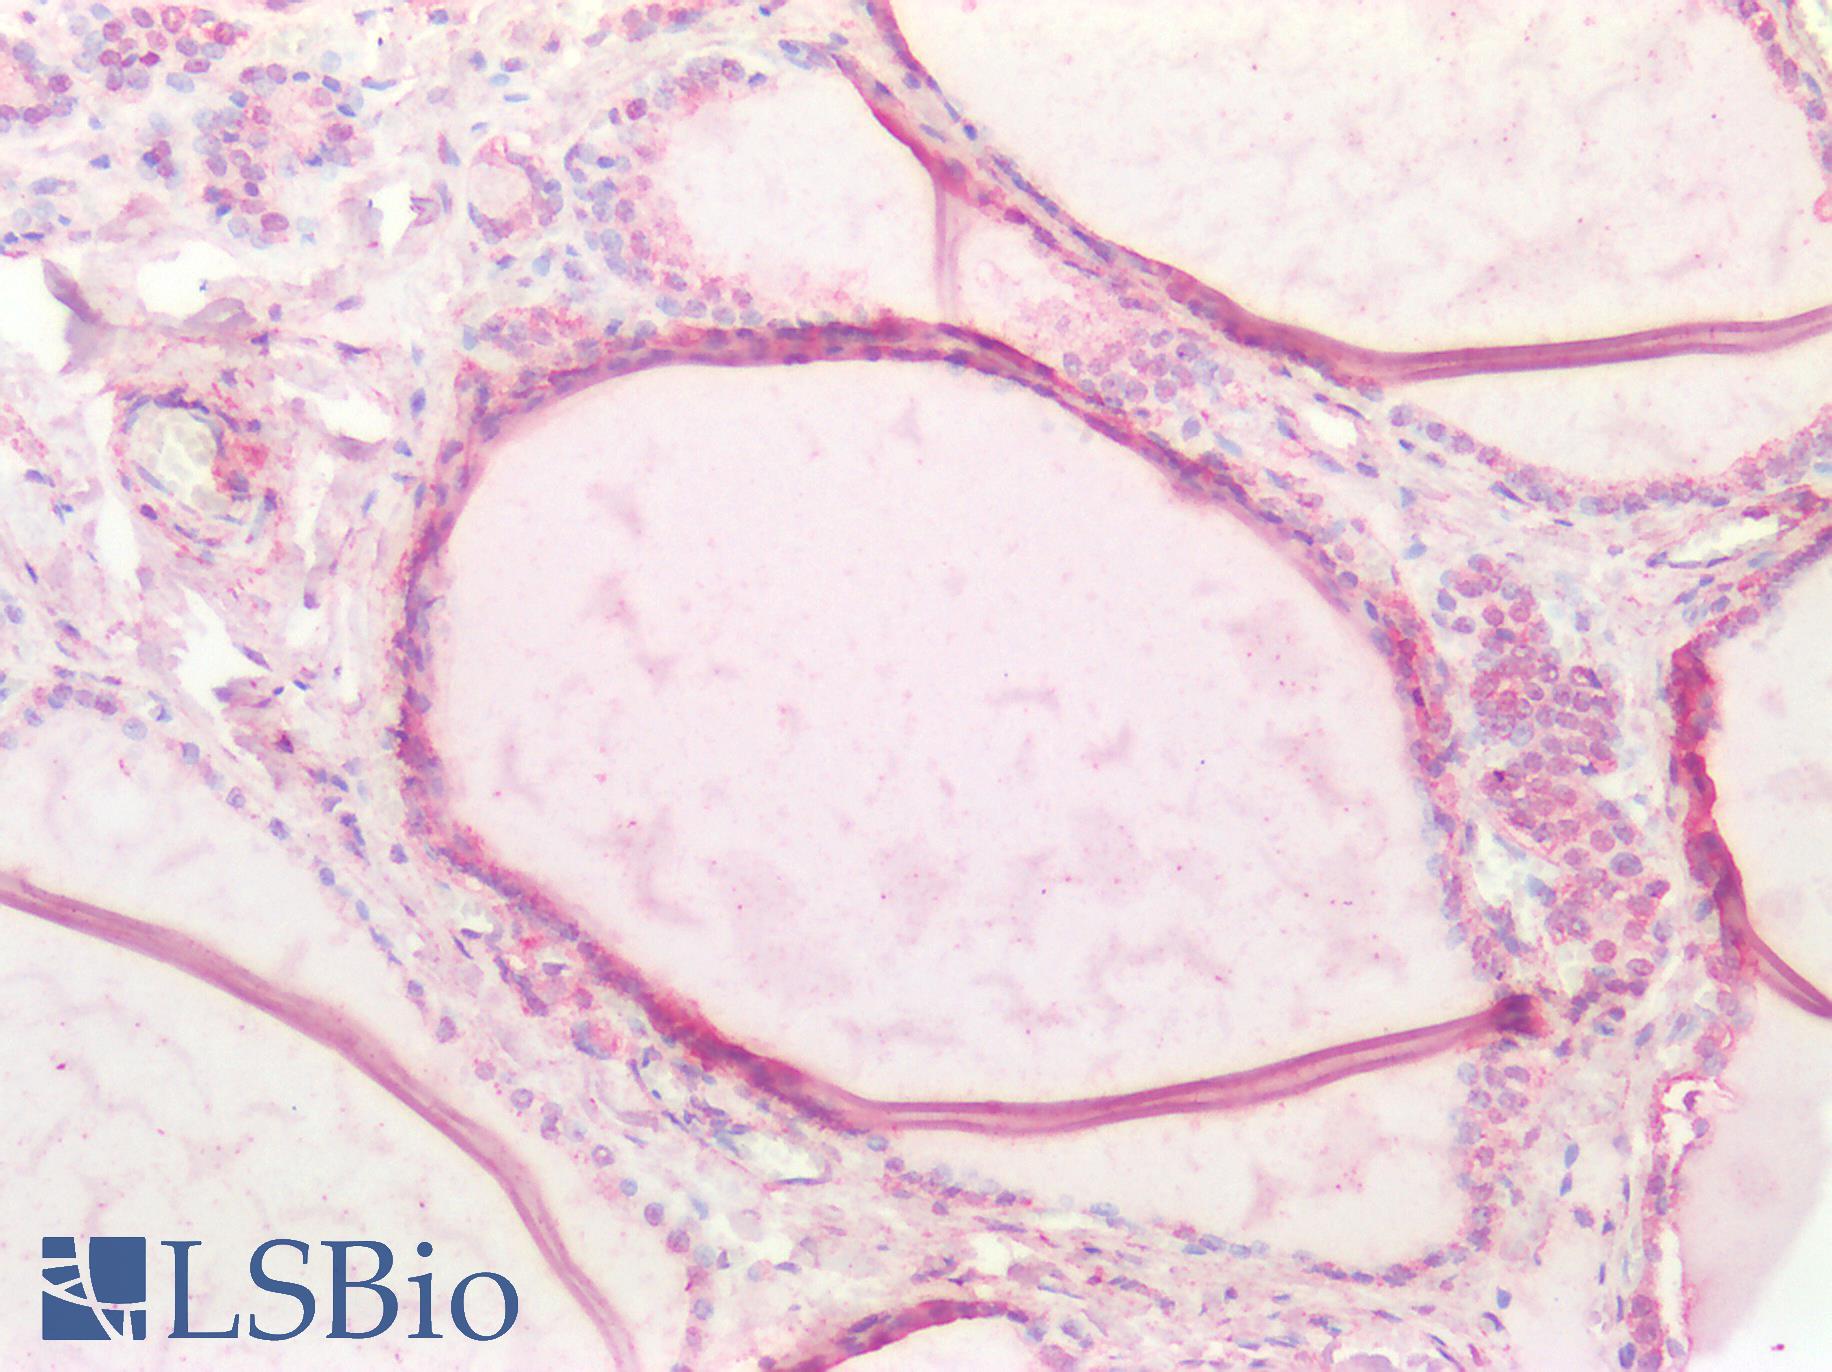 CTSB / Cathepsin B Antibody - Human Thyroid: Formalin-Fixed, Paraffin-Embedded (FFPE)